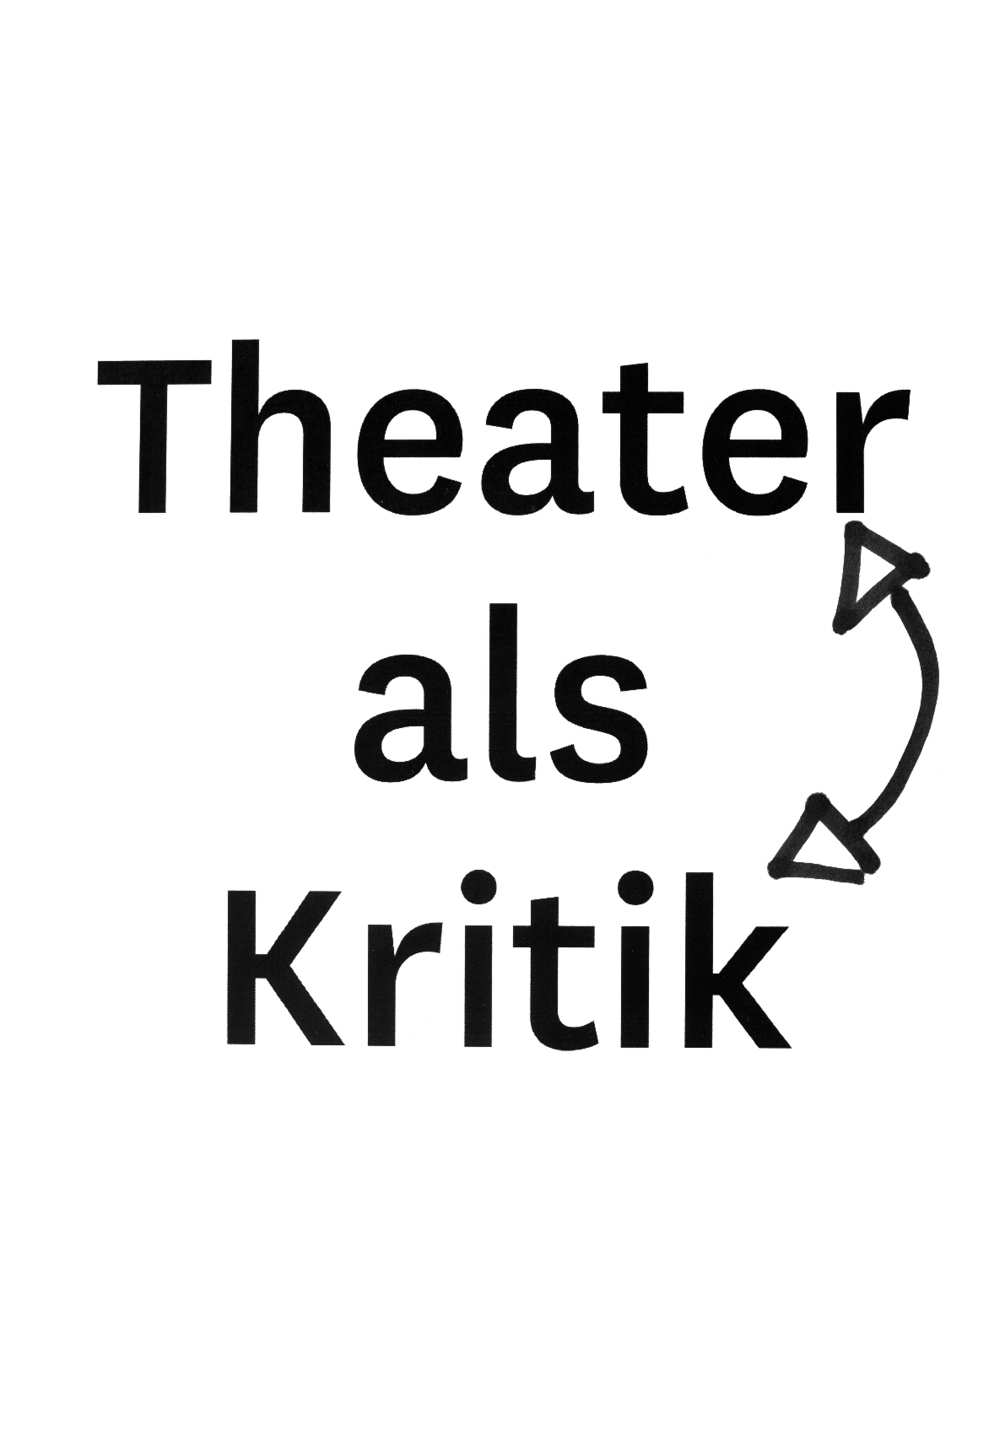 theater-as-critique-slip-12-1005x1435px